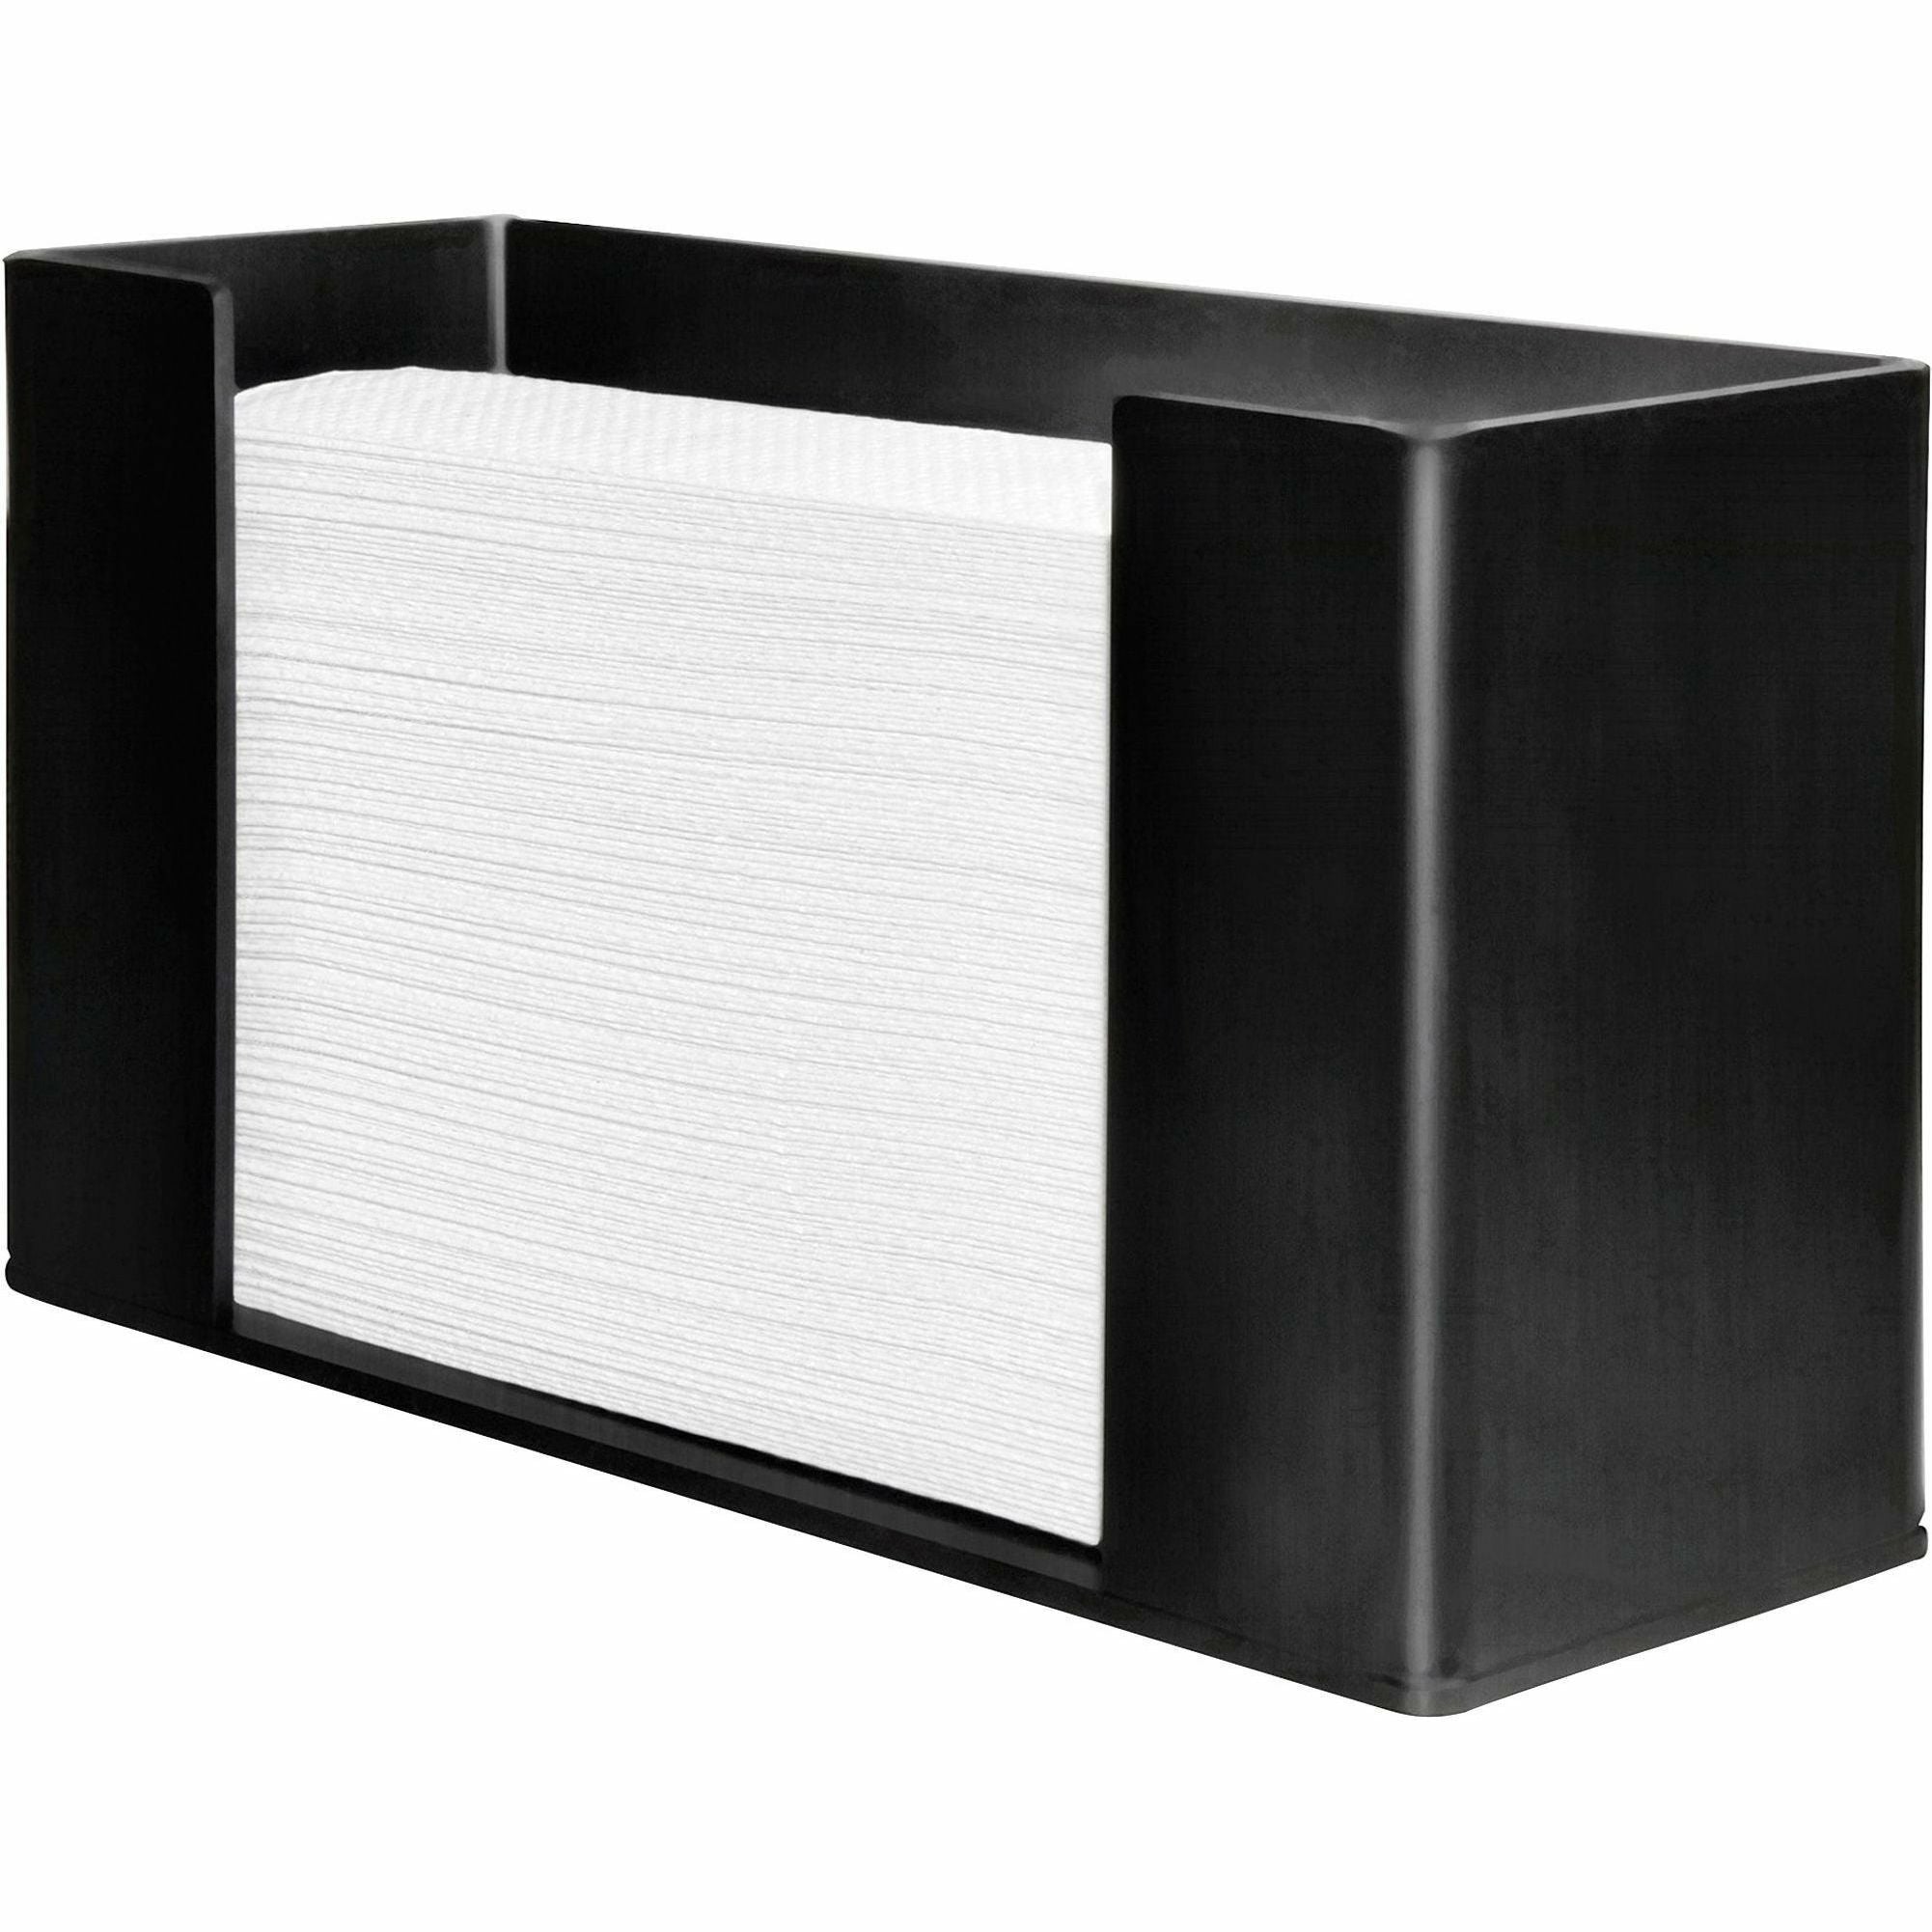 genuine-joe-folded-paper-towel-dispenser-c-fold-multifold-dispenser-68-height-x-115-width-x-41-depth-acrylic-black-wall-mountable-9-carton_gjo11524ct - 2